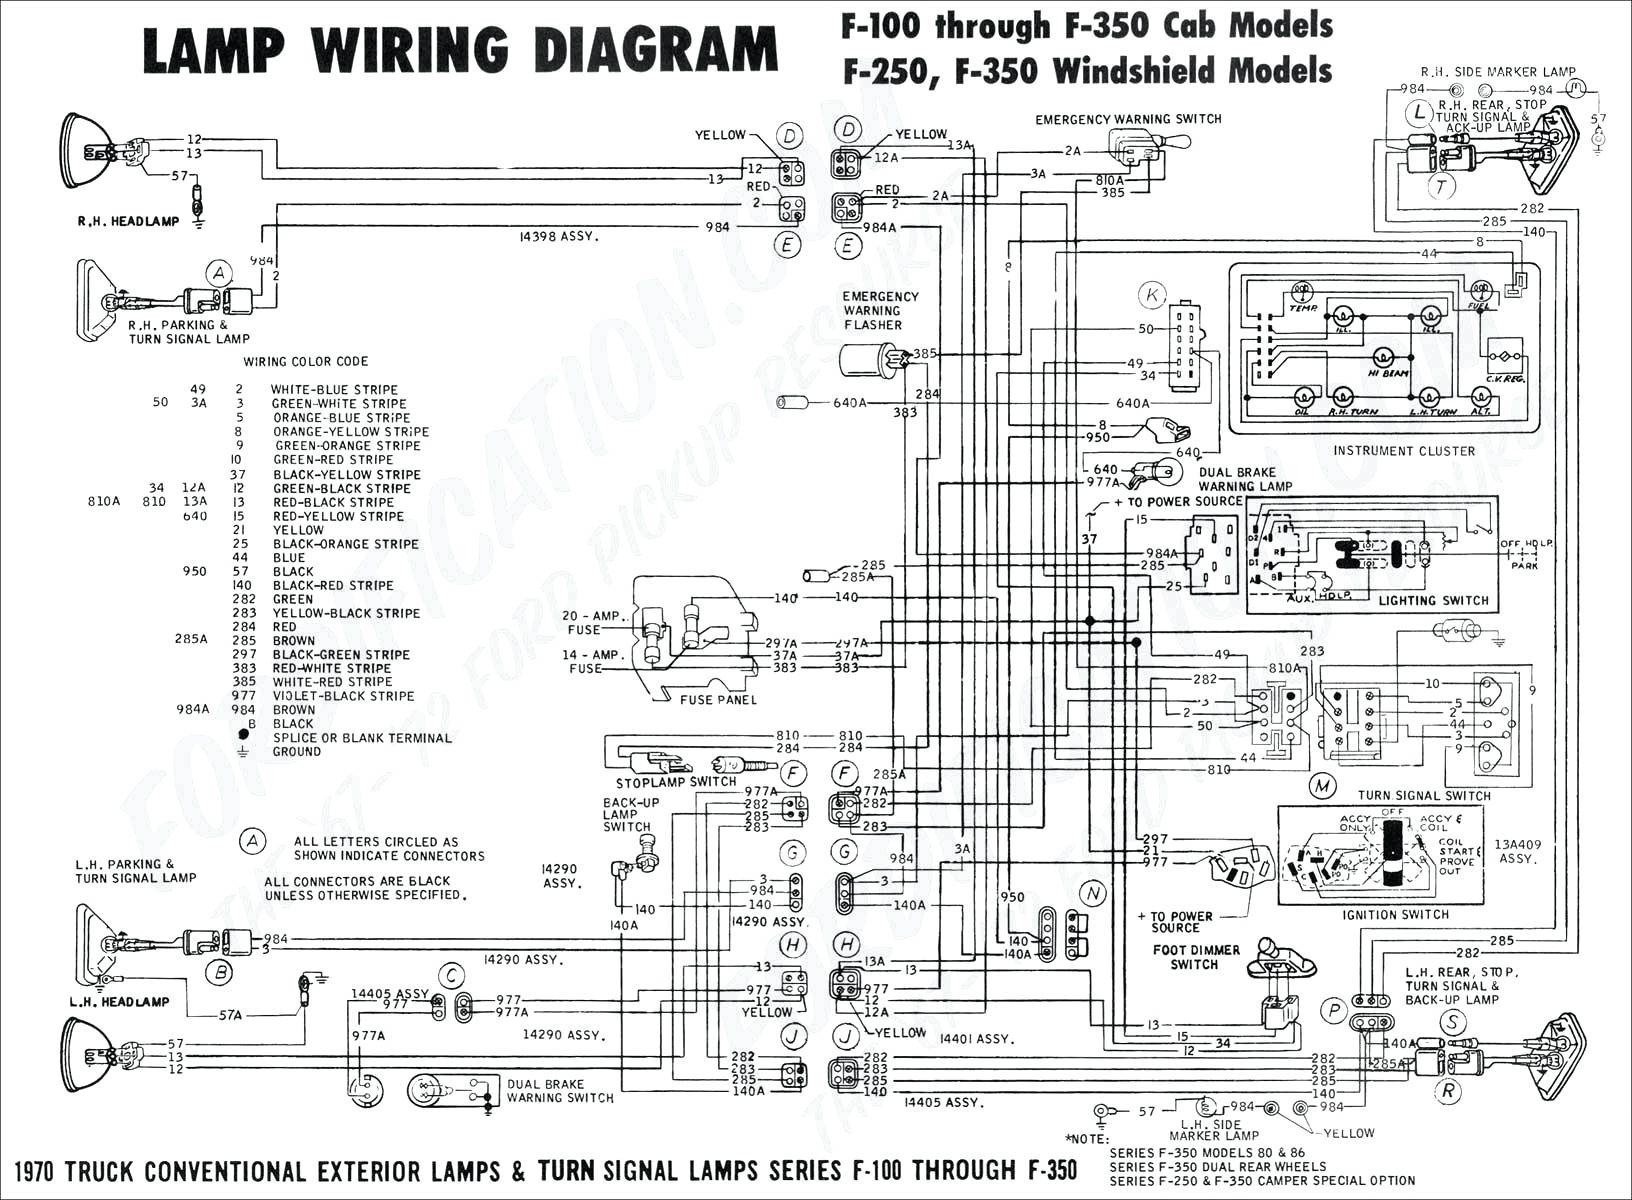 Toyota Stereo Wiring Diagram 1997 toyota Previa Stereo Wiring Diagram Wiring Diagram toolbox Of Toyota Stereo Wiring Diagram